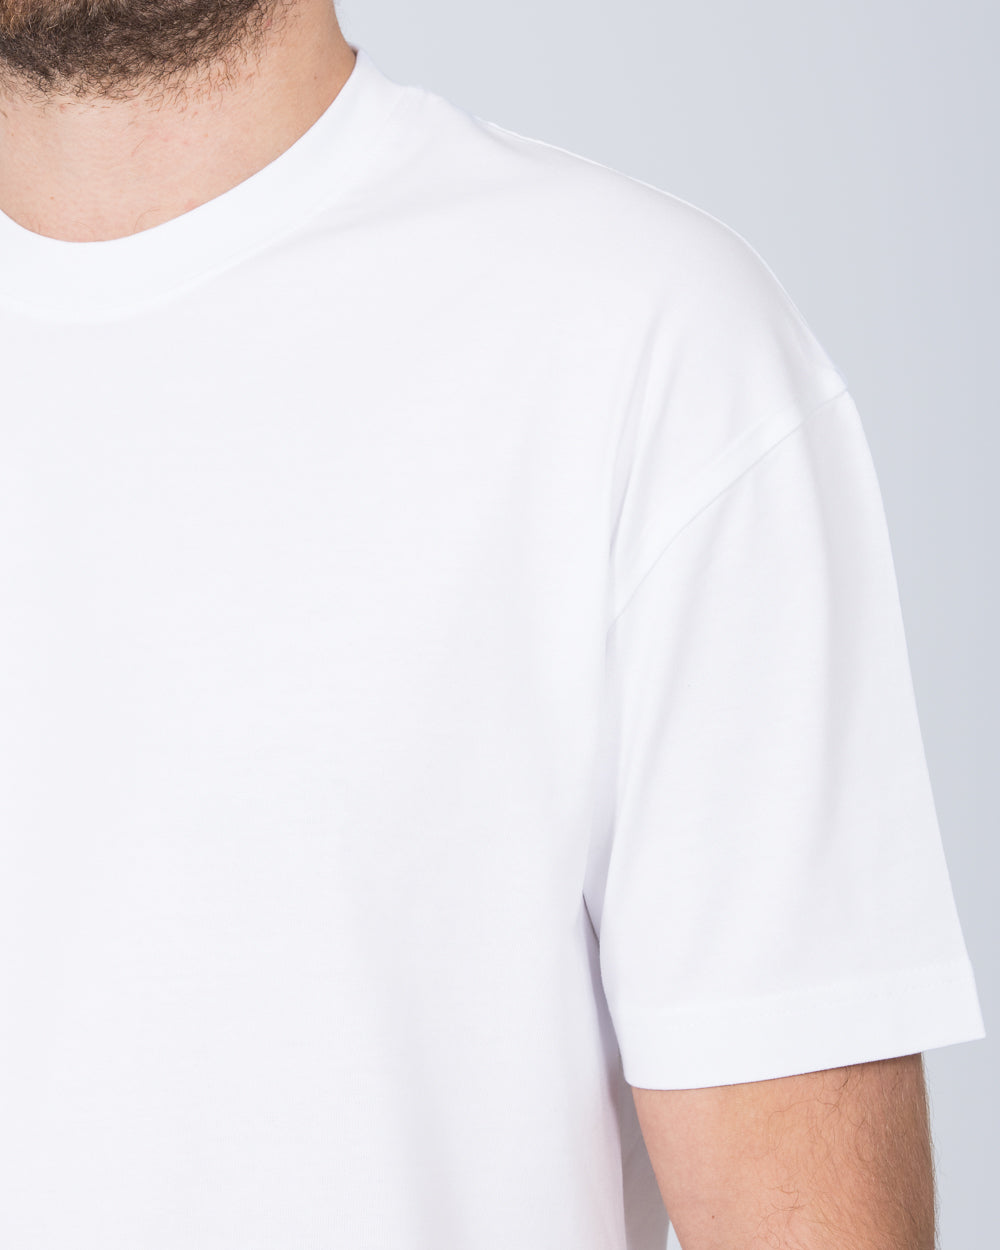 Girav Dallas Extra Tall Oversized T-Shirt (white)